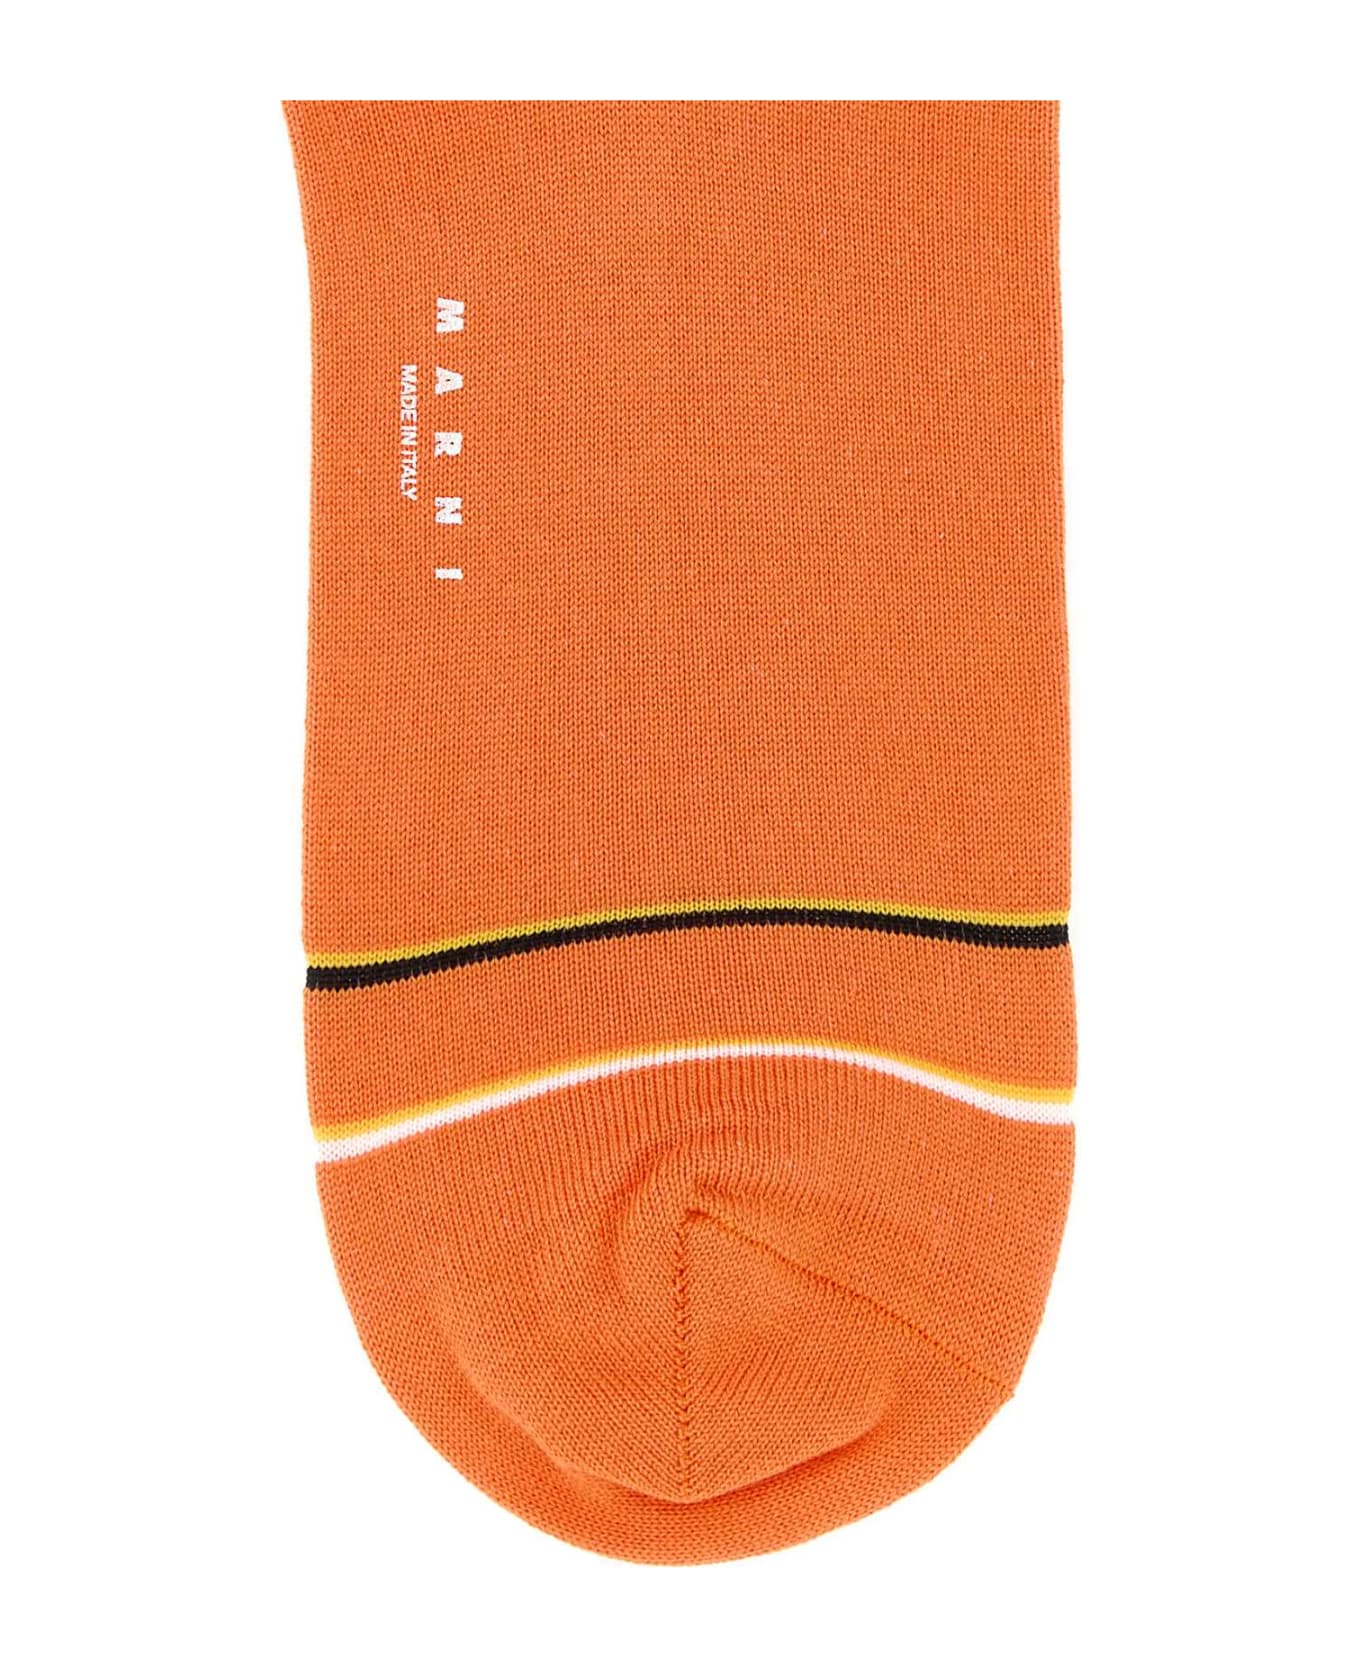 Marni Orange Cotton Blend Socks - NECTARINE 靴下